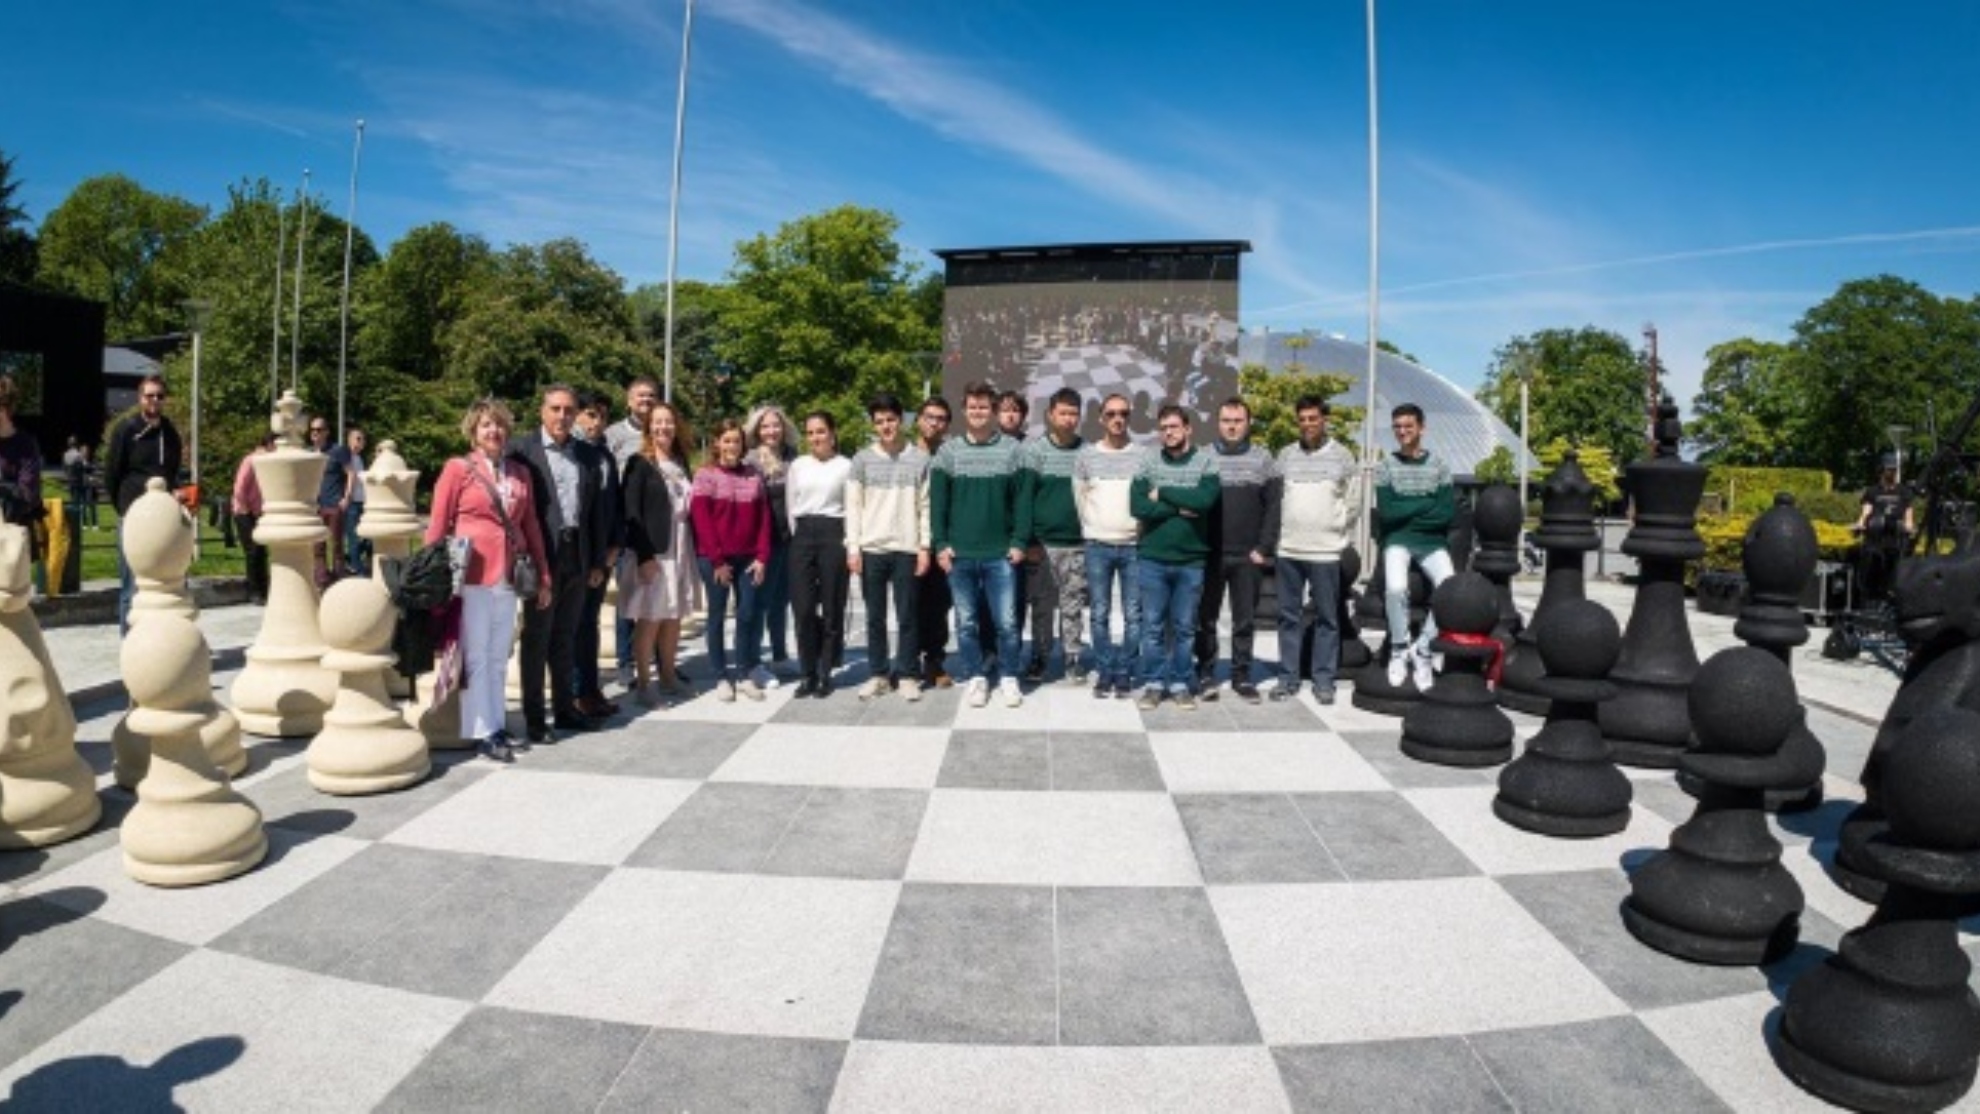 Parque gigante de ajedrez en Madrid - Tiwel